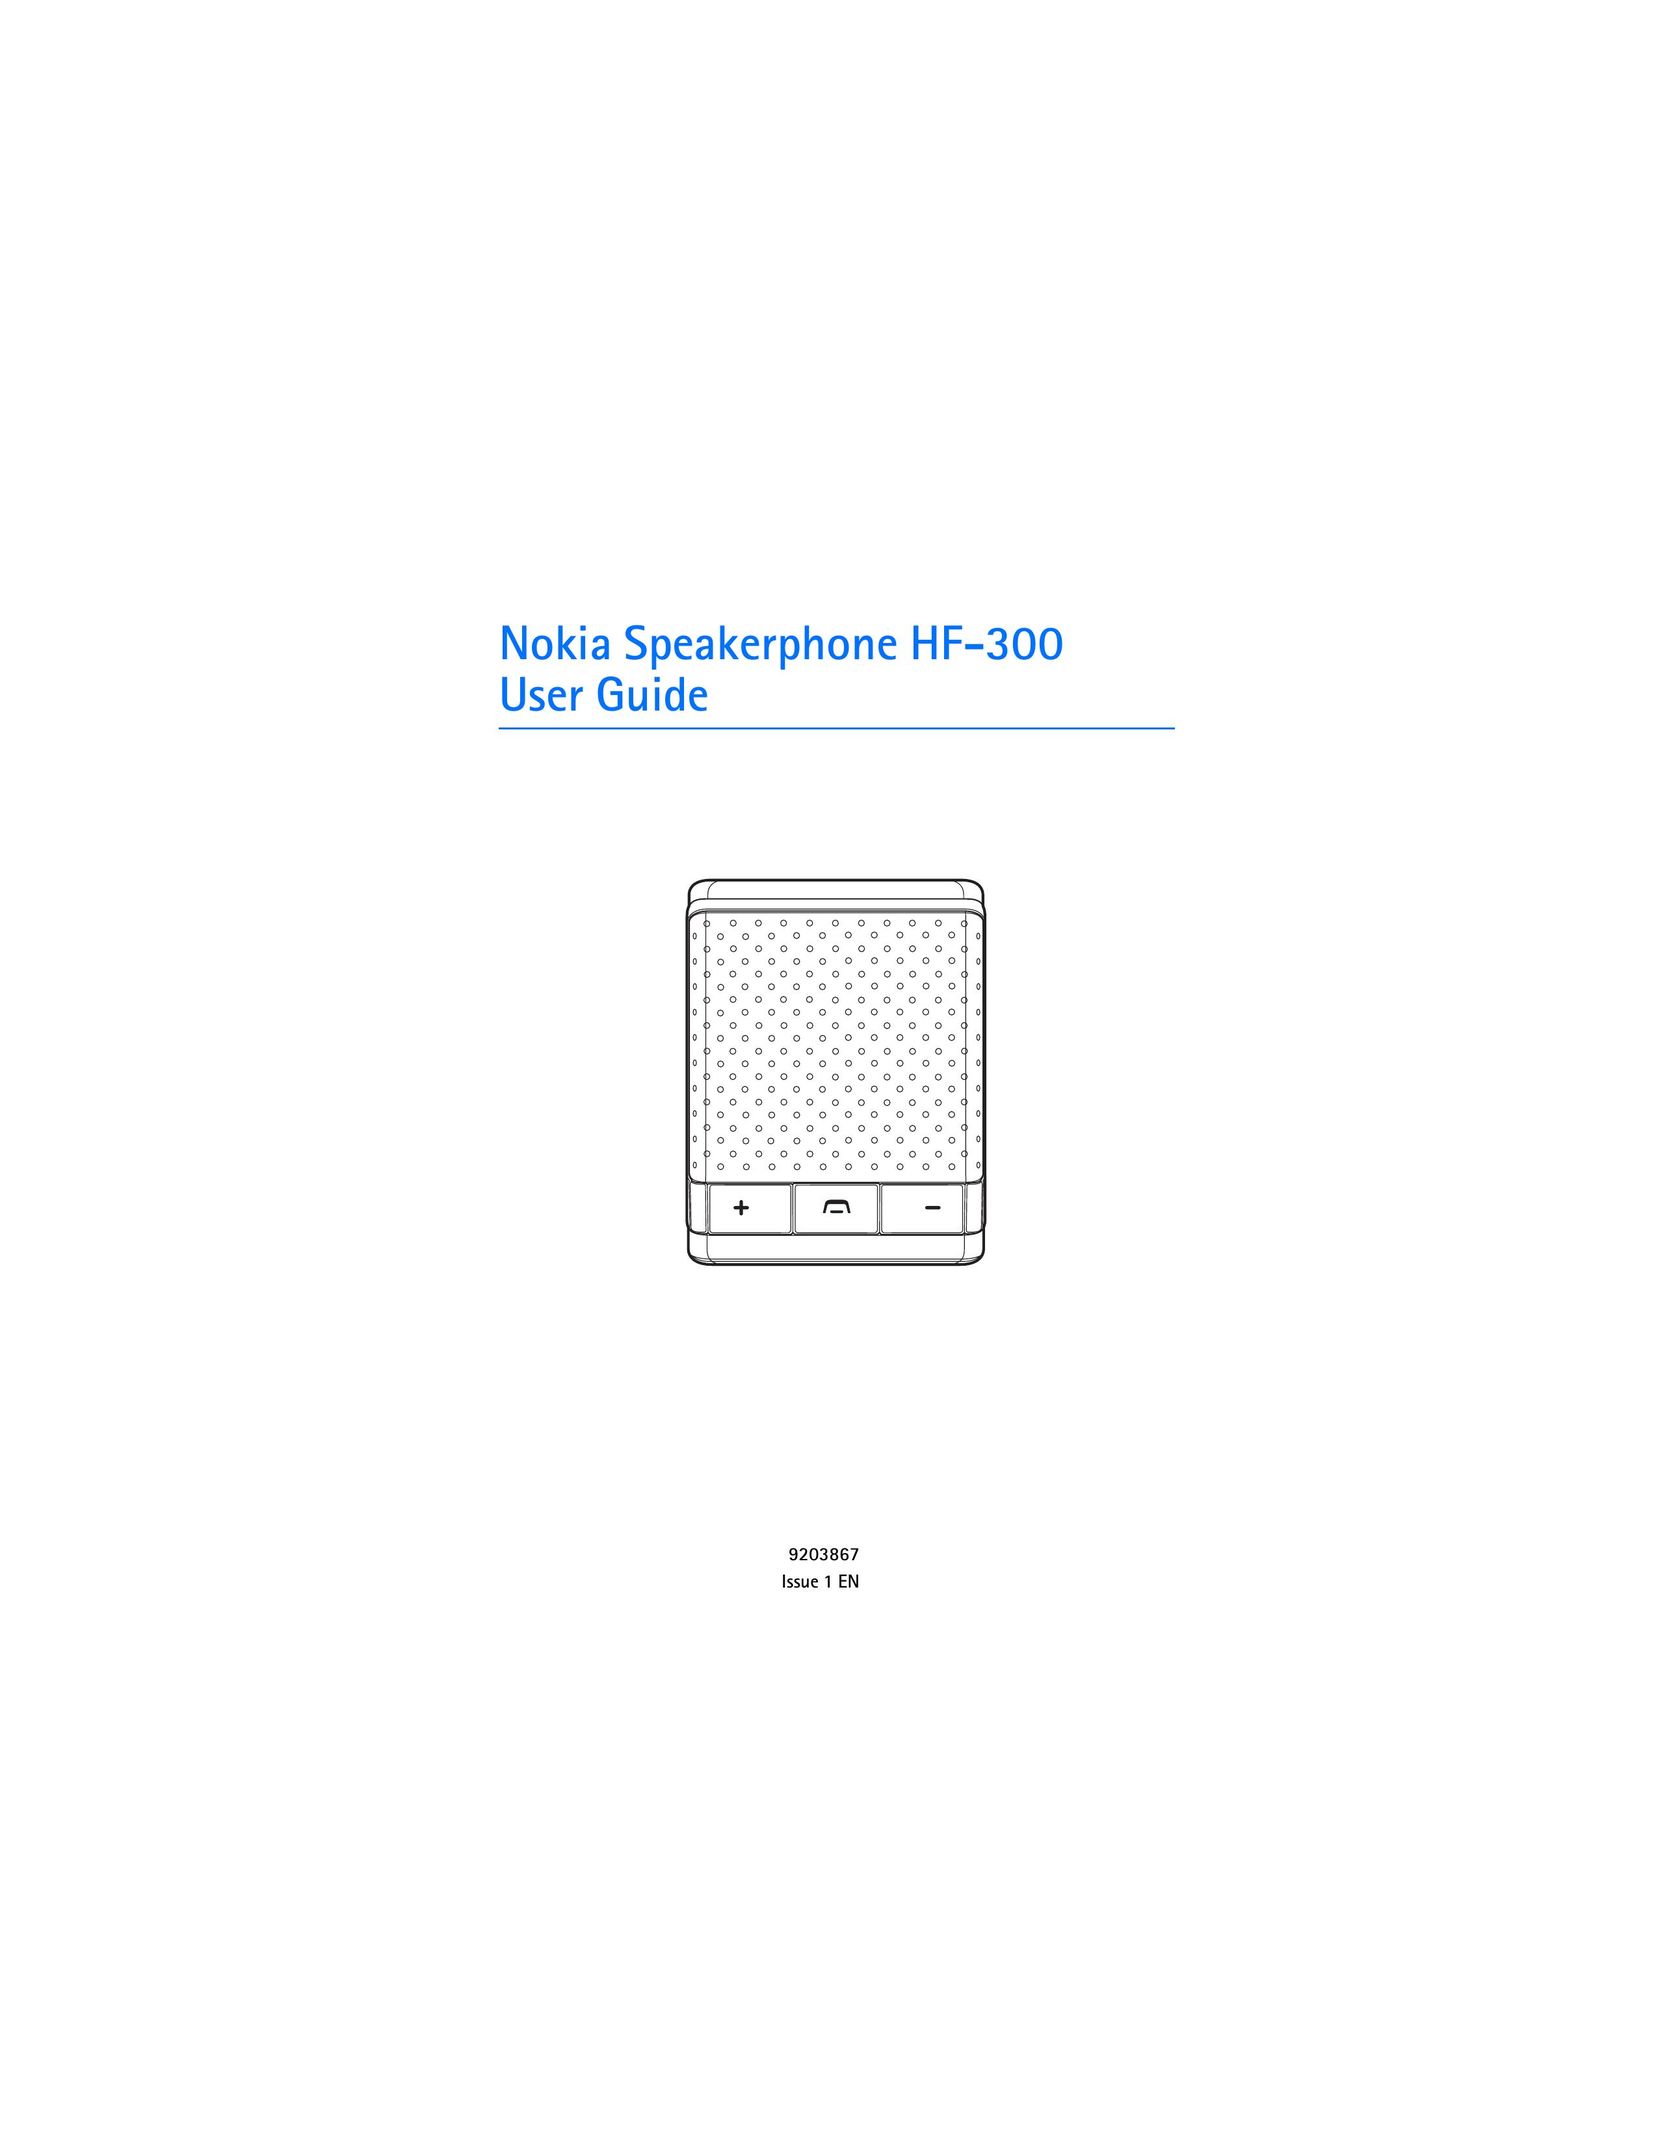 Nokia HF-300 Telephone User Manual (Page 1)